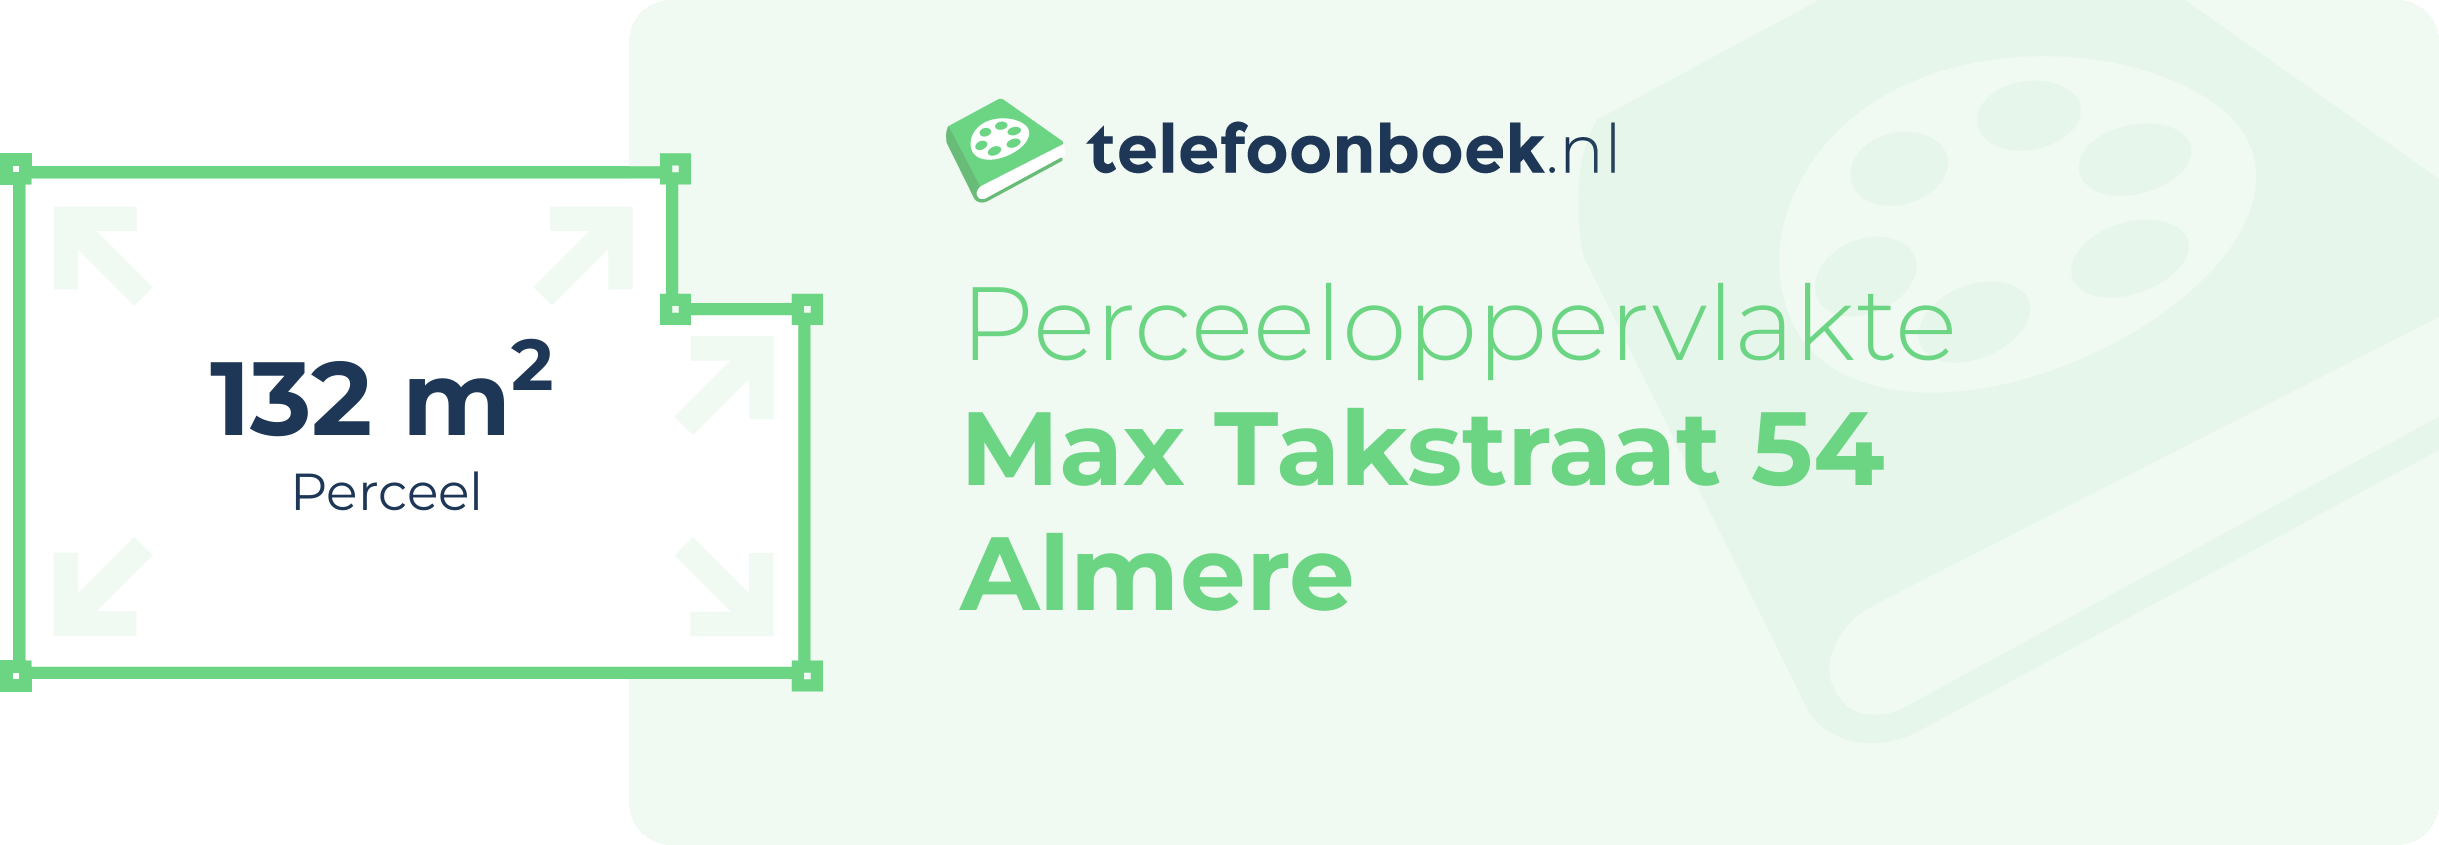 Perceeloppervlakte Max Takstraat 54 Almere